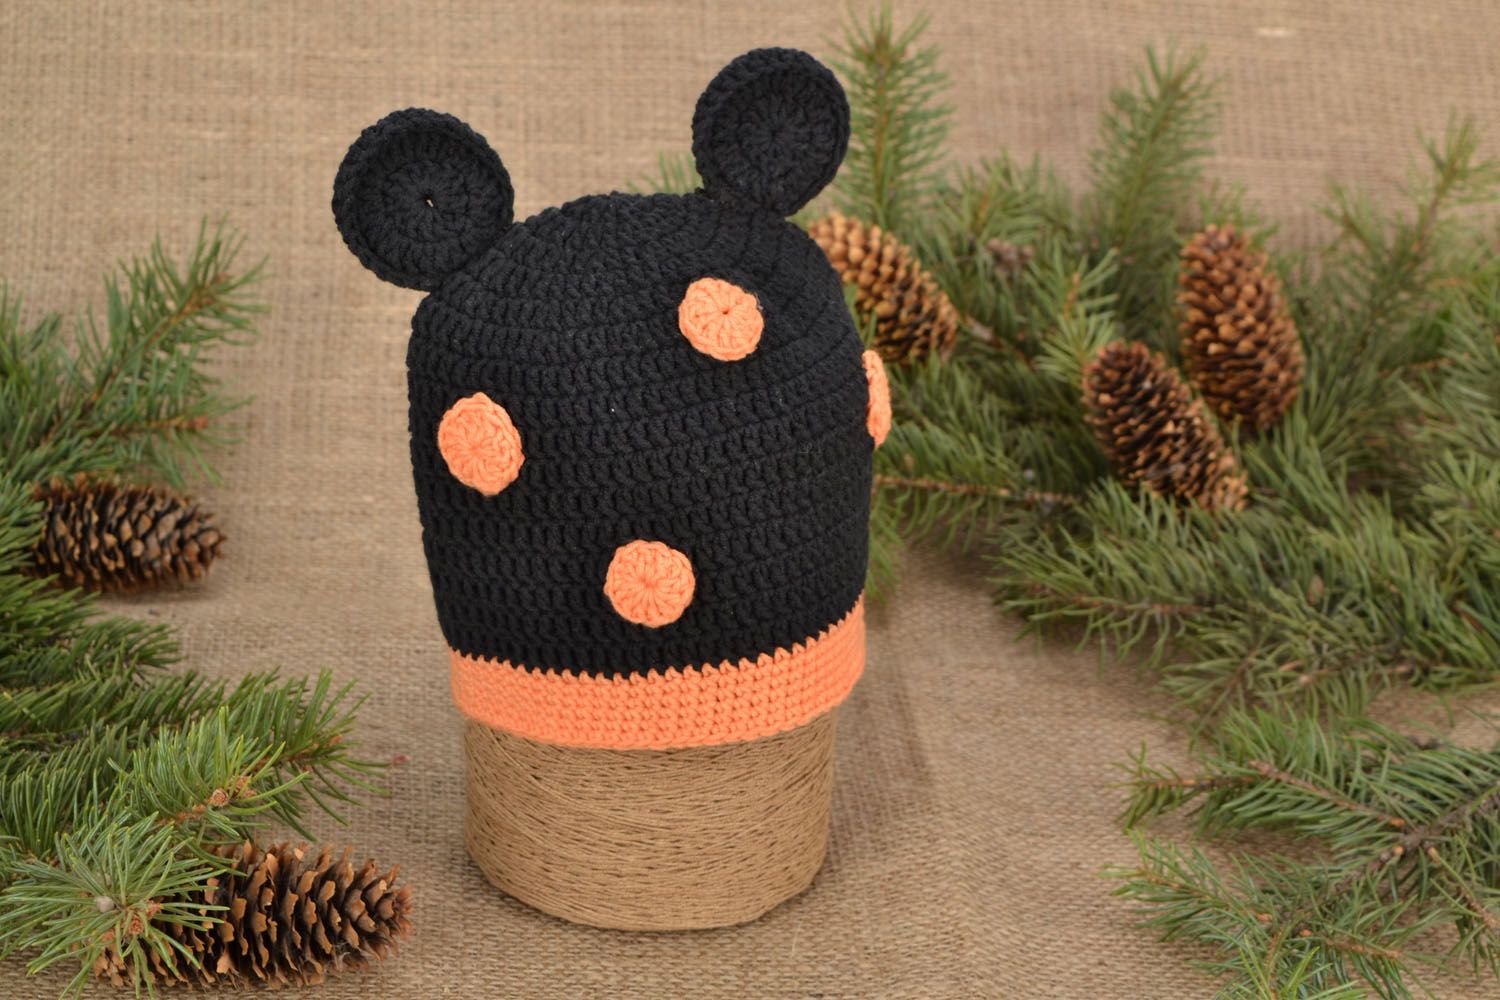 Crochet children's hat Black with Ears photo 1